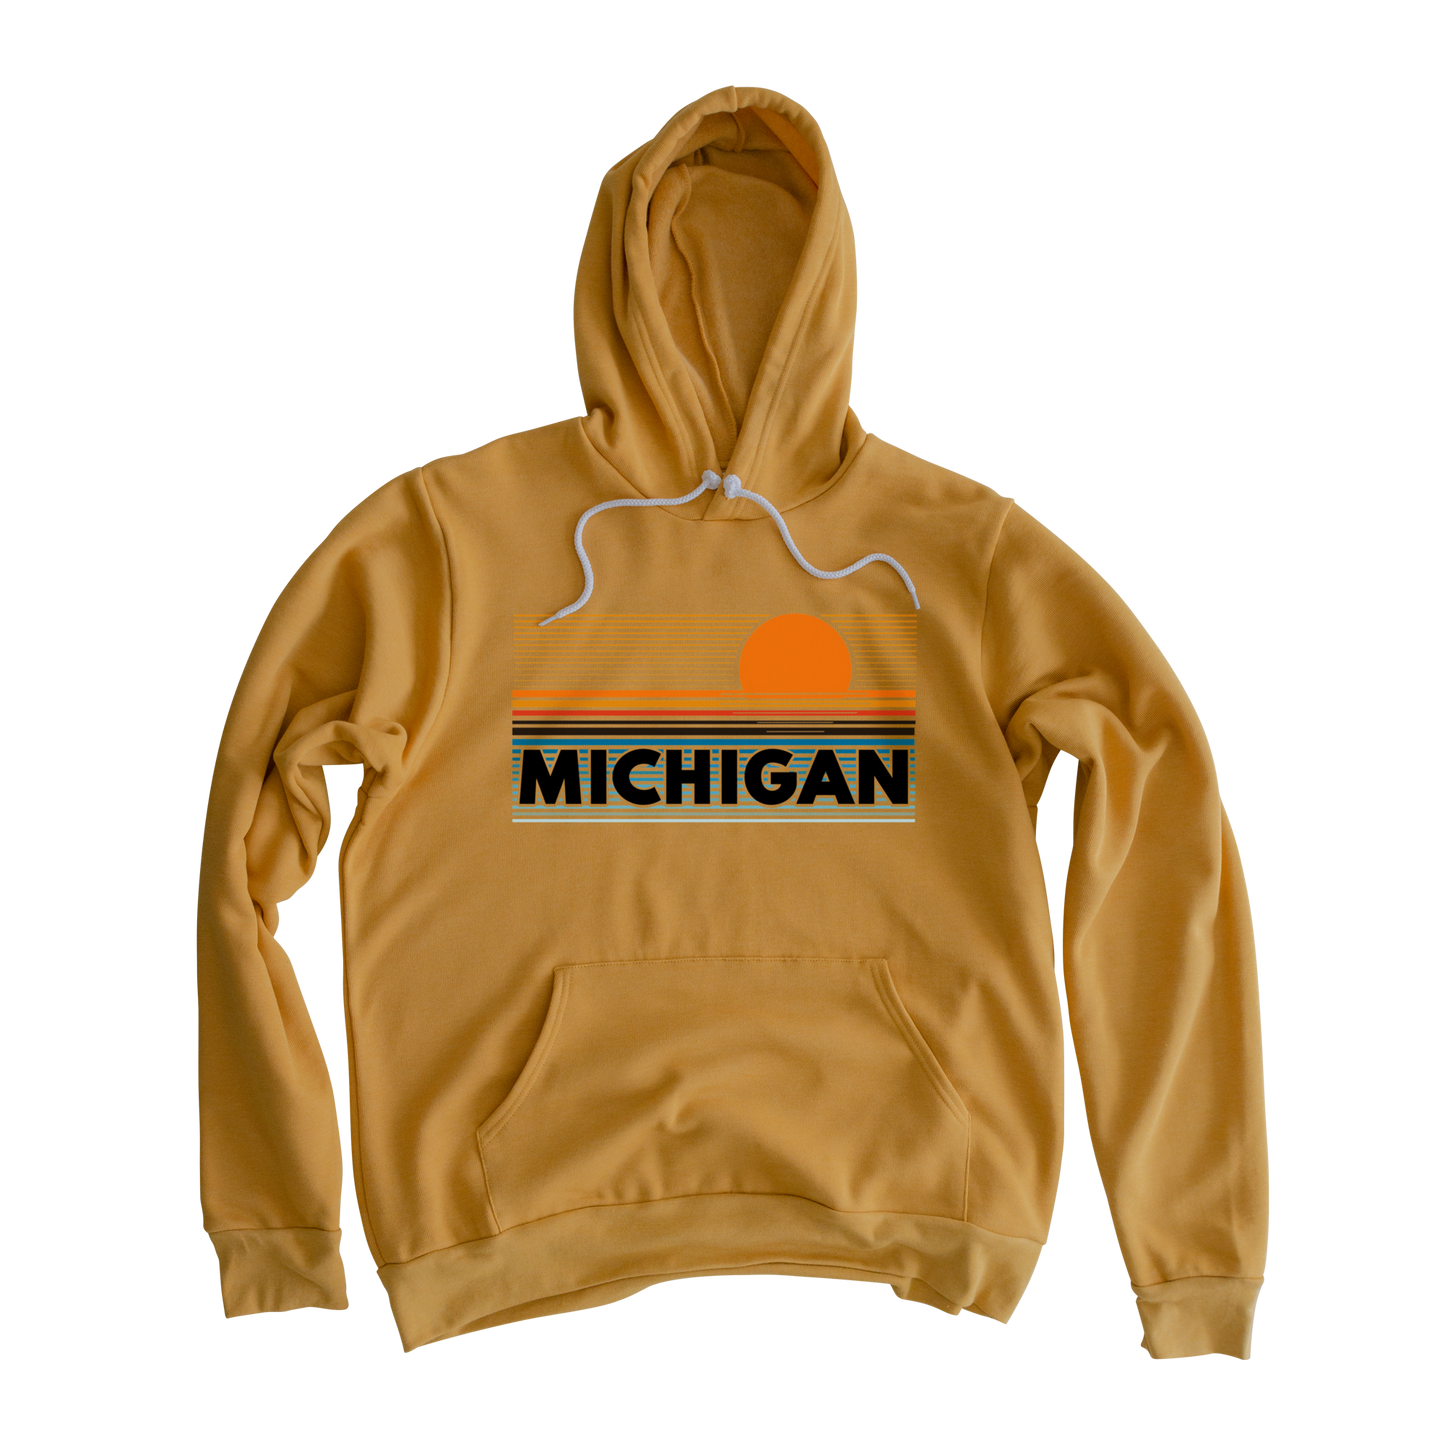 Michigan Sunset Hooded Sweatshirt